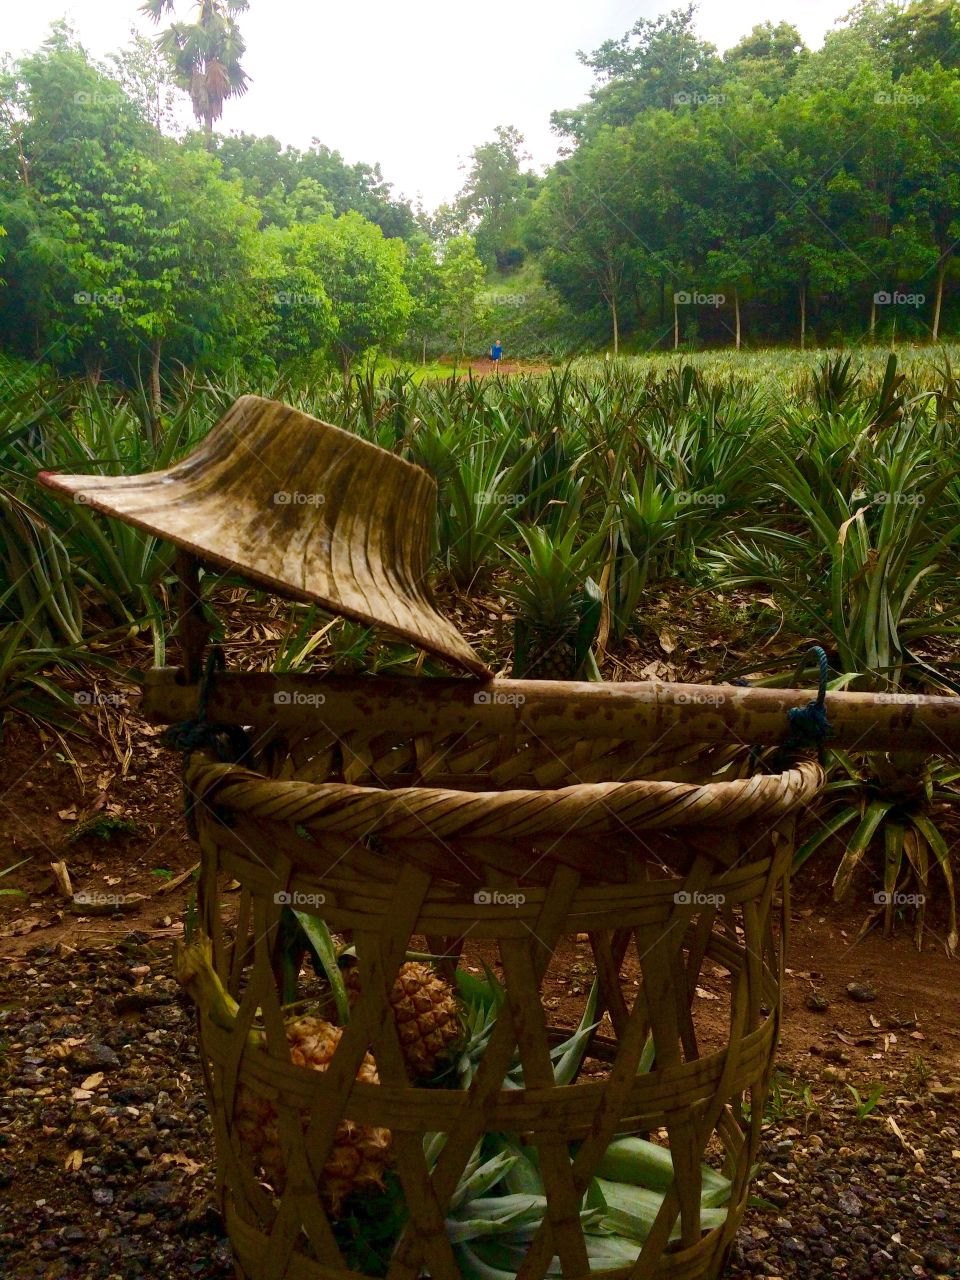 Picker’s Bamboo Hat, Basket, & Pole In A Pineapple Field In Thailand